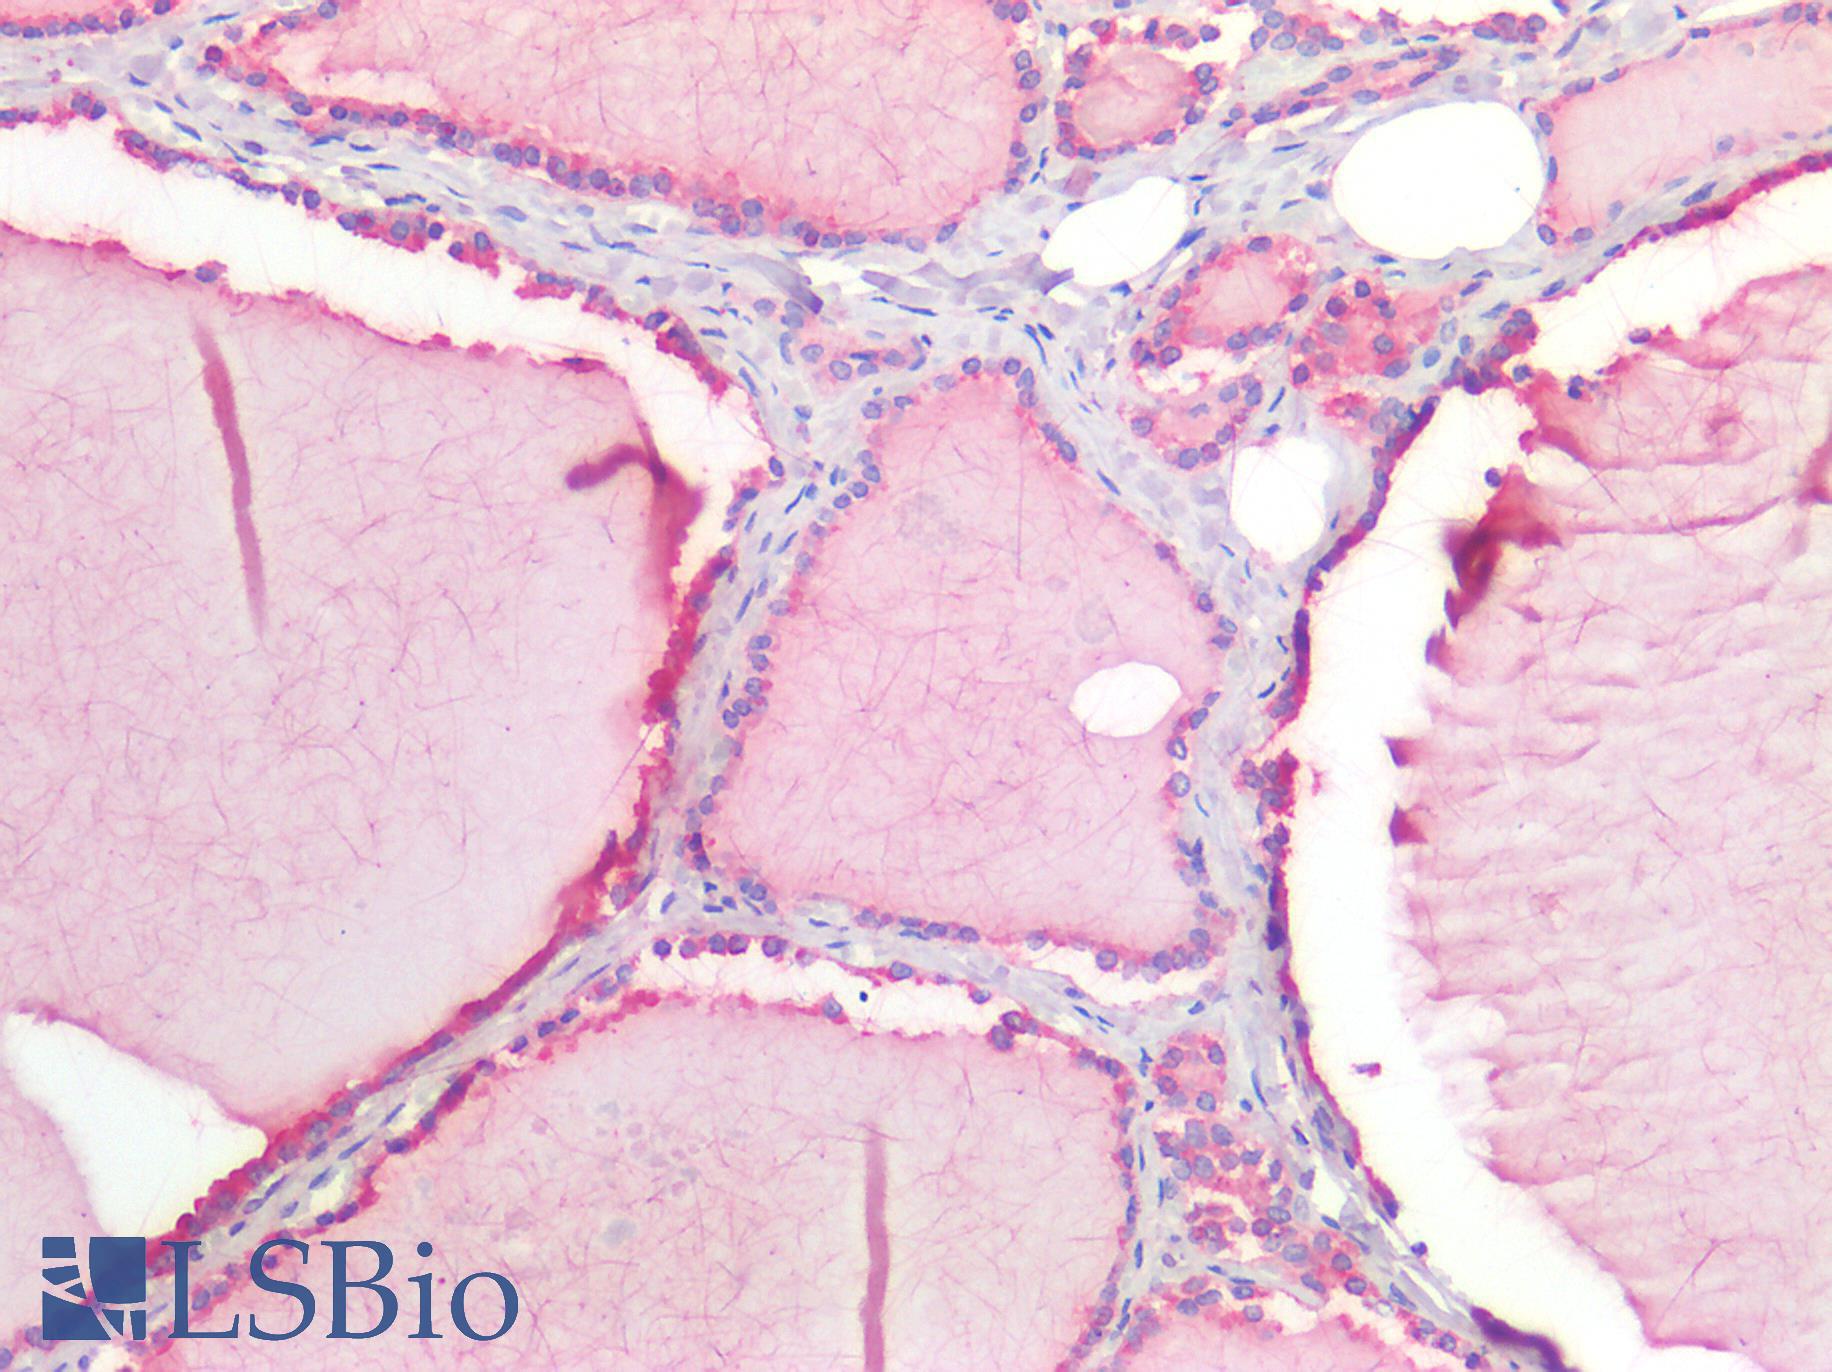 IFIH1 / MDA5 Antibody - Human Thyroid: Formalin-Fixed, Paraffin-Embedded (FFPE)